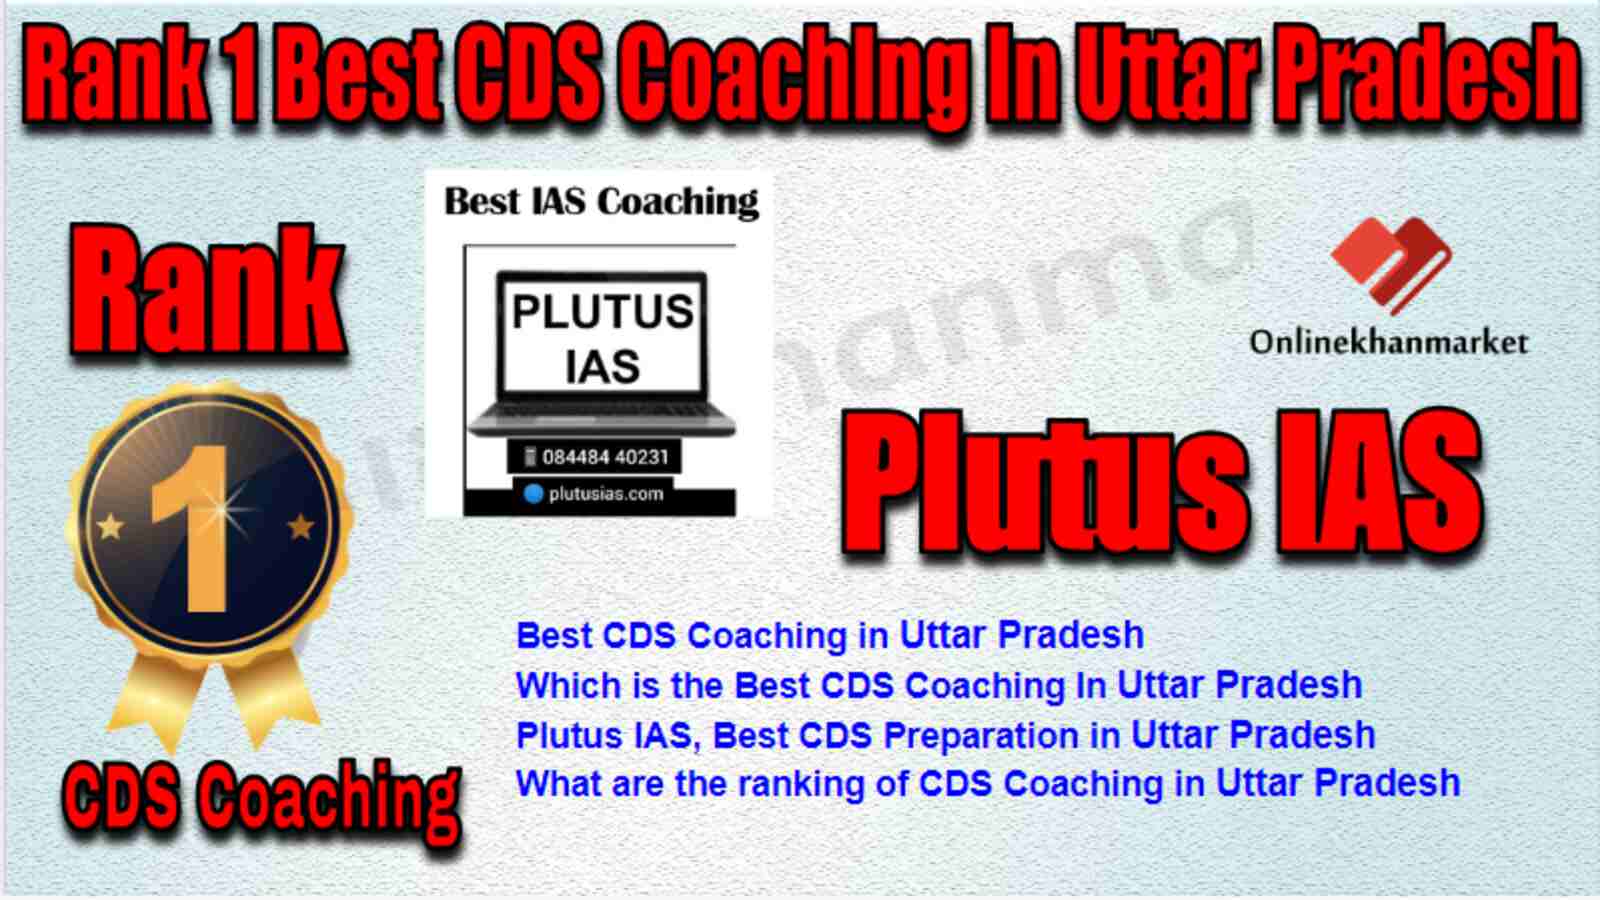 Rank 1 Best CDS Coaching in Uttar Pradesh